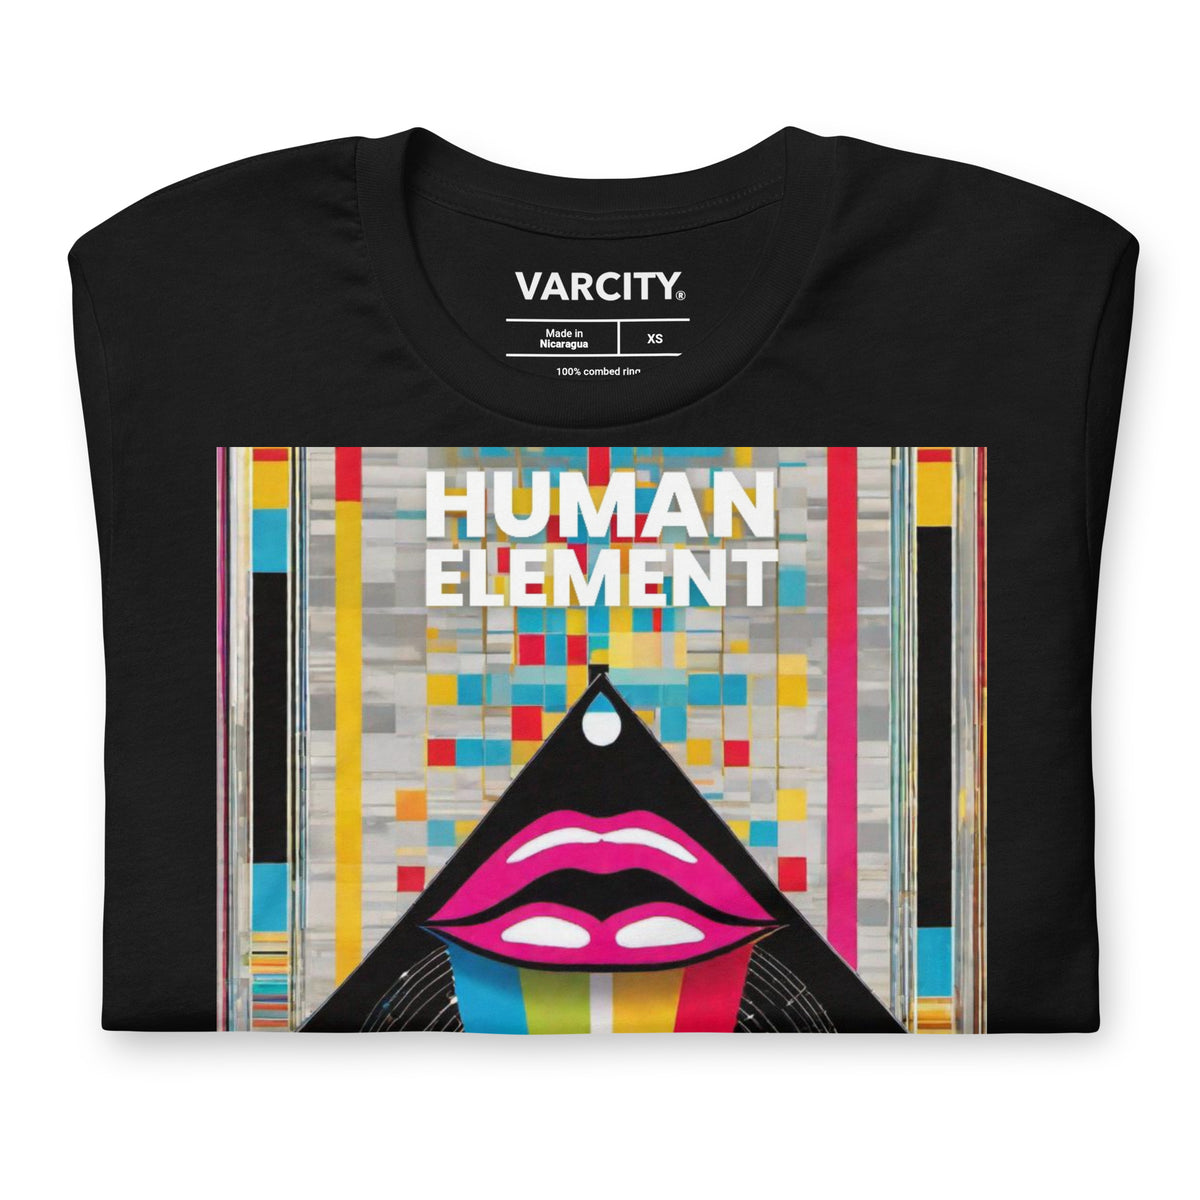 Human Element Psychedelic Kiss Unisex T-Shirt